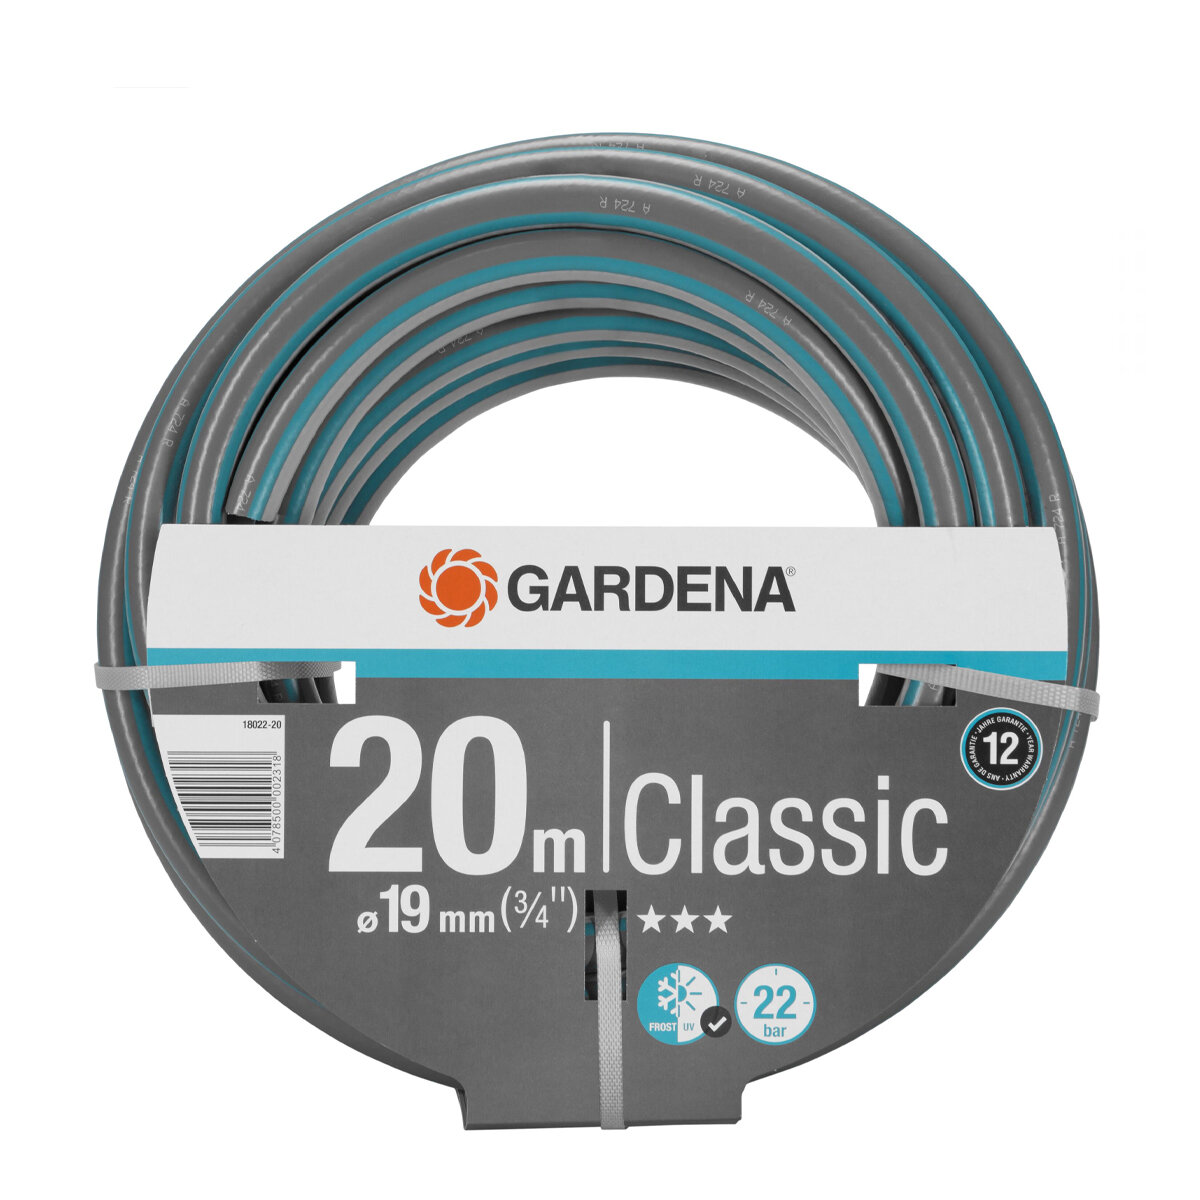    Gardena Classic, 3/4", 20 